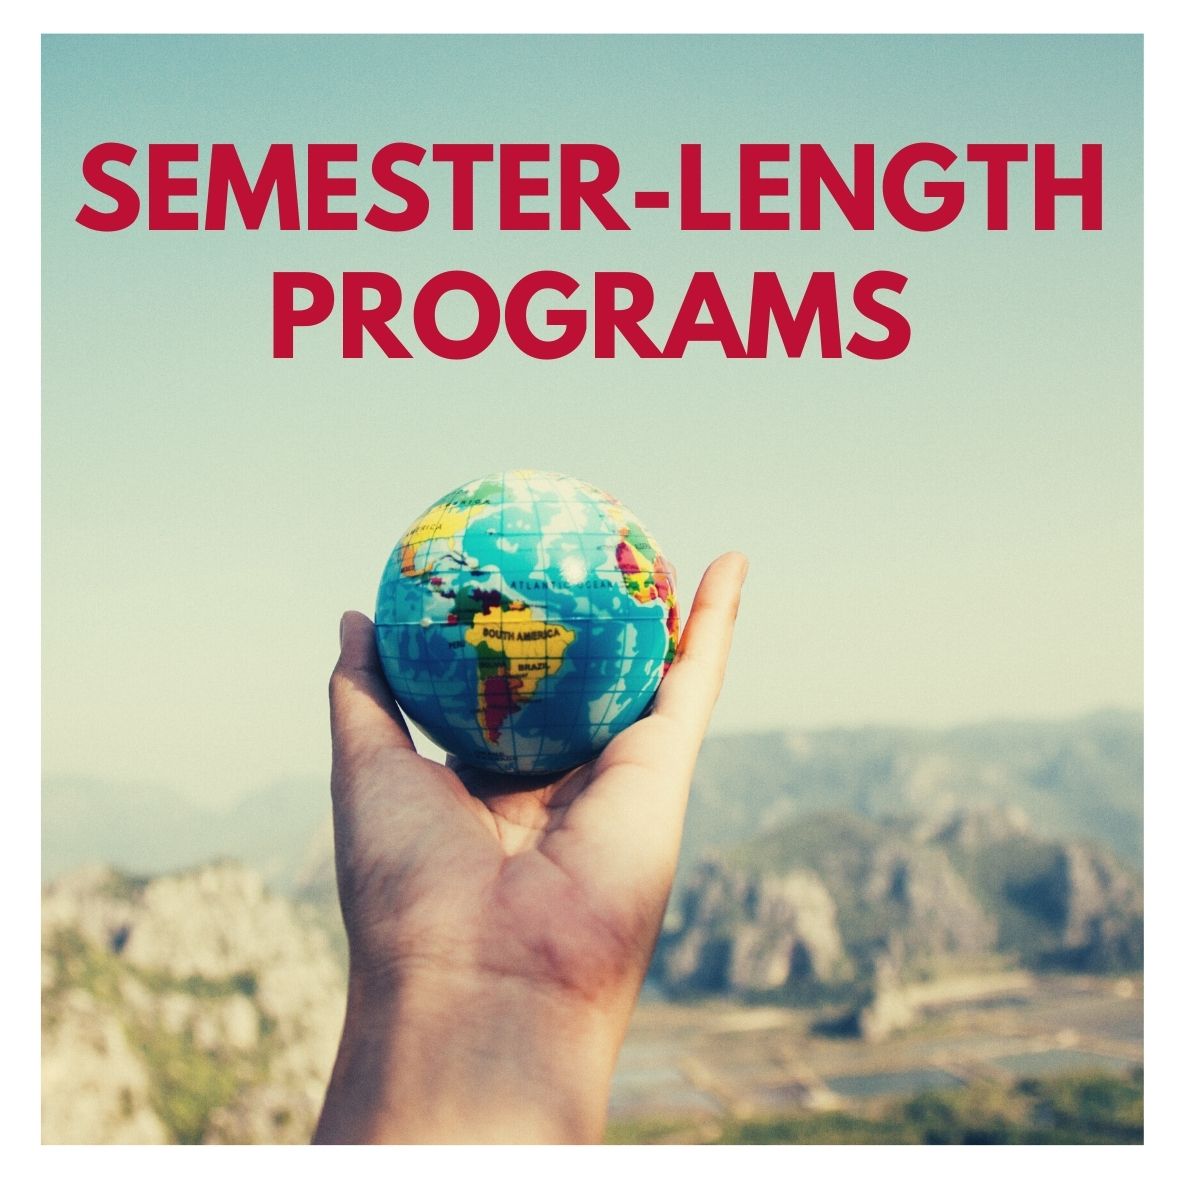 Semester-length programs